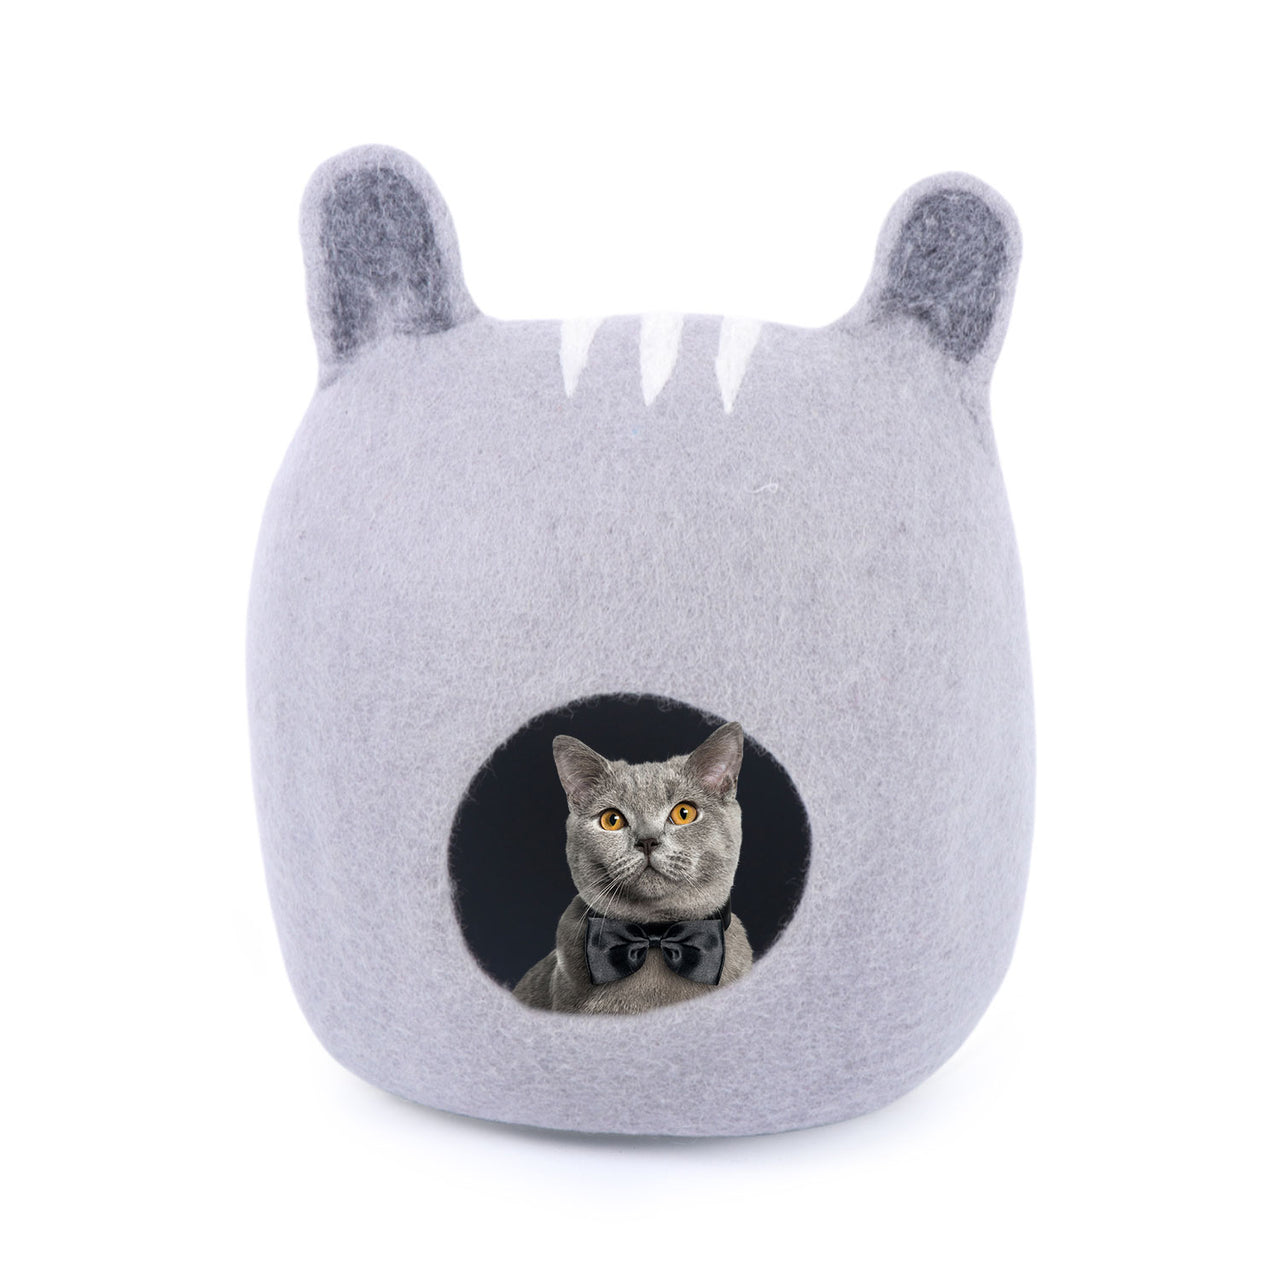 100% Natural Wool Cat Cave - Handmade Premium Shaped Felt